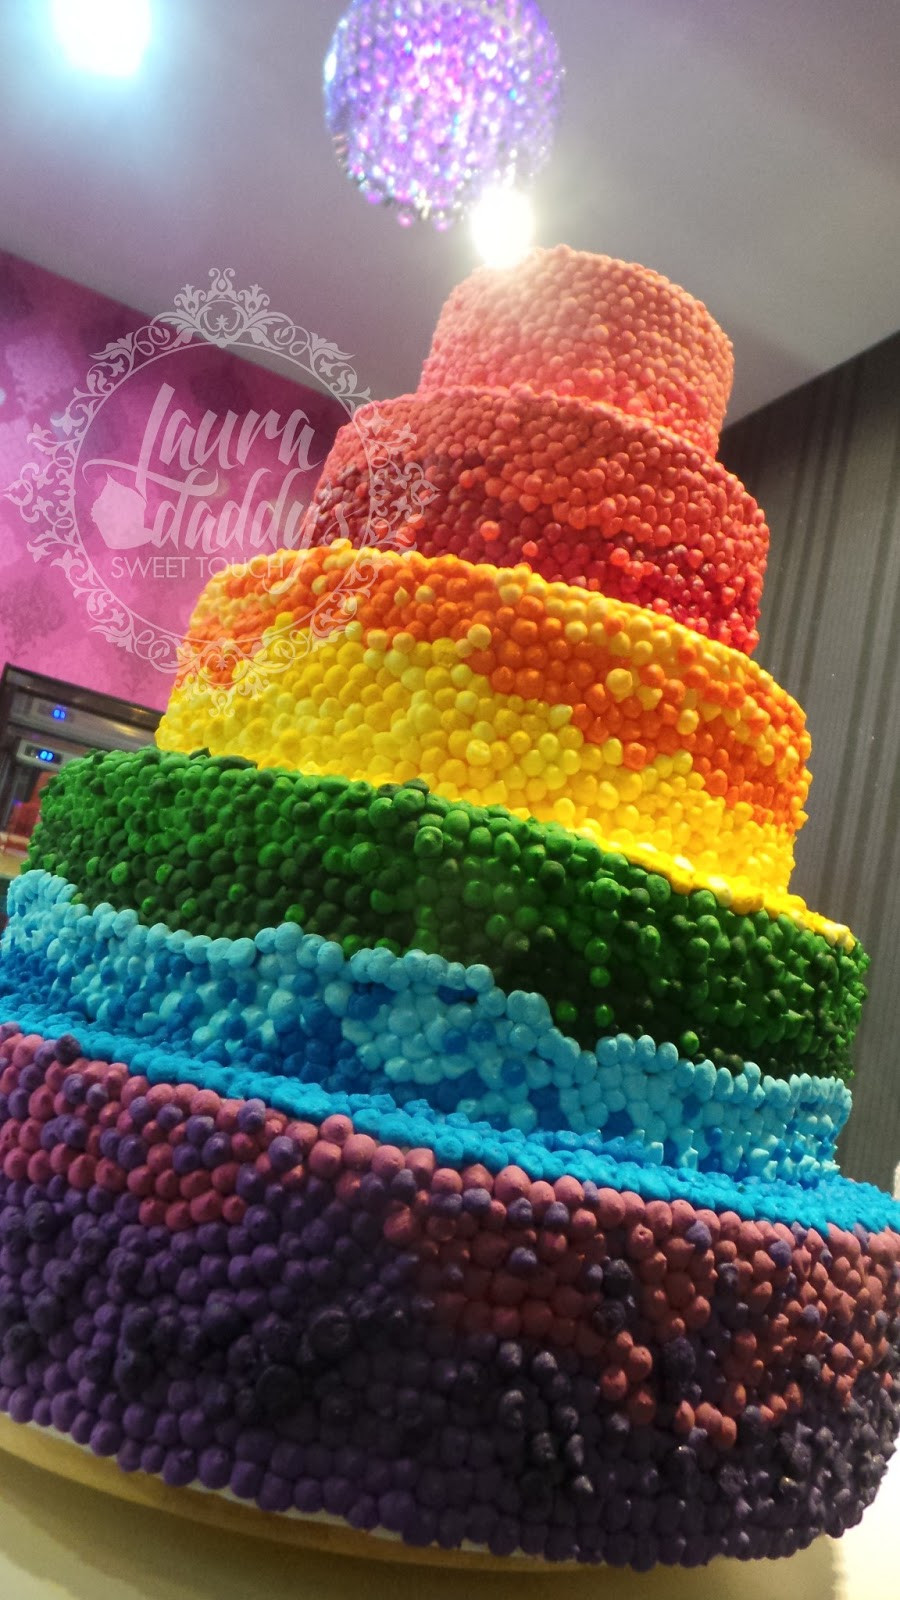 Rainbow Wedding Cakes
 LAURA AND DADDYS MACARONS Rainbow Wedding Cake